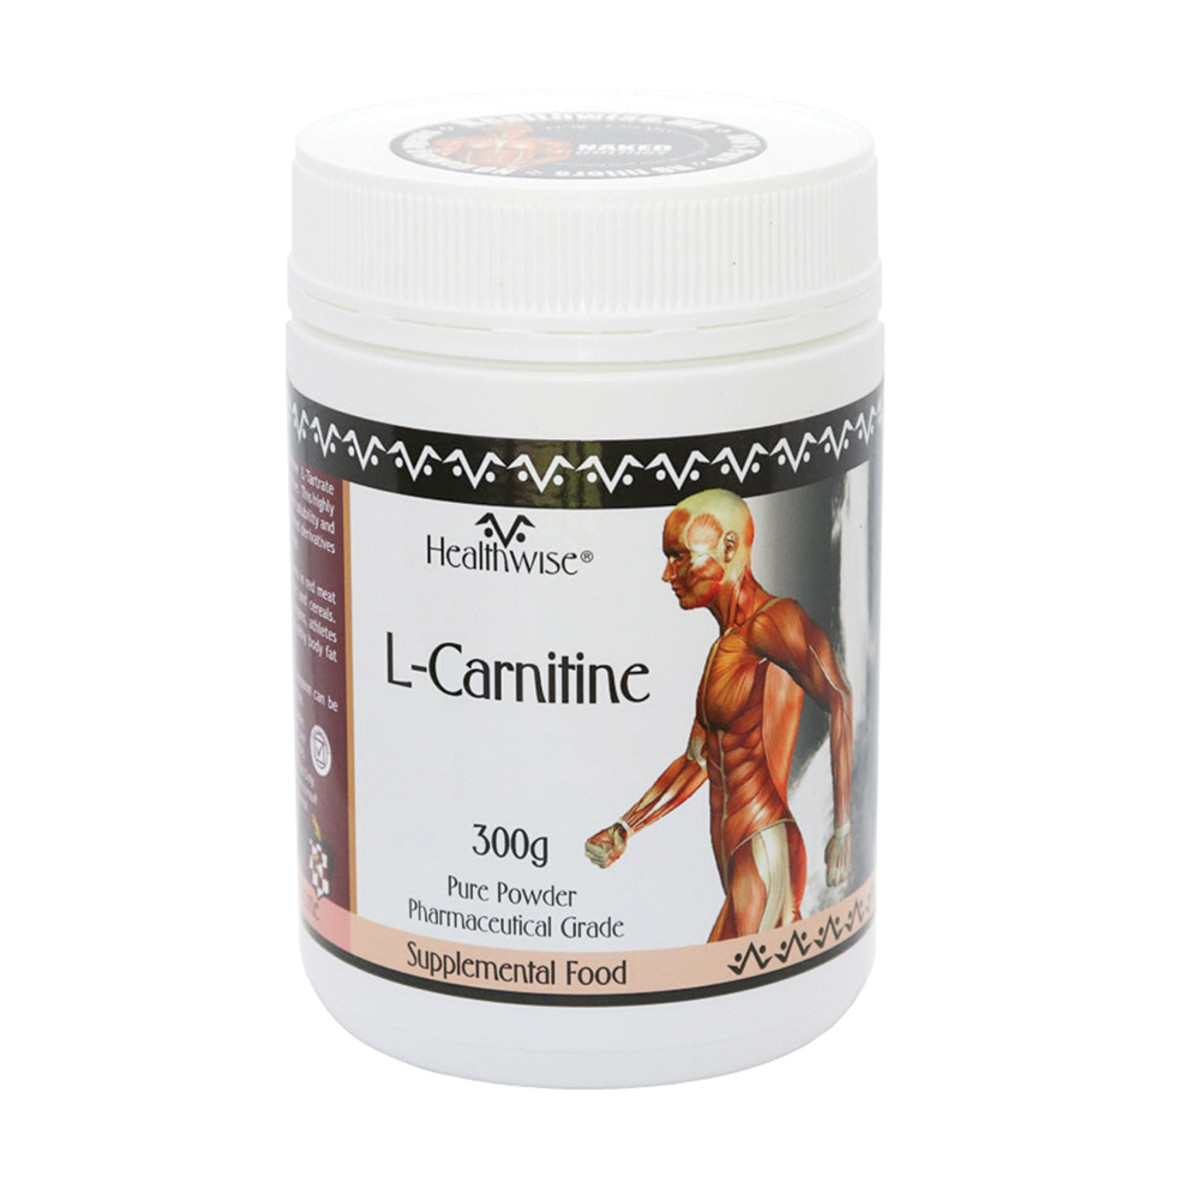 HEALTHWISE - L-Carnitine